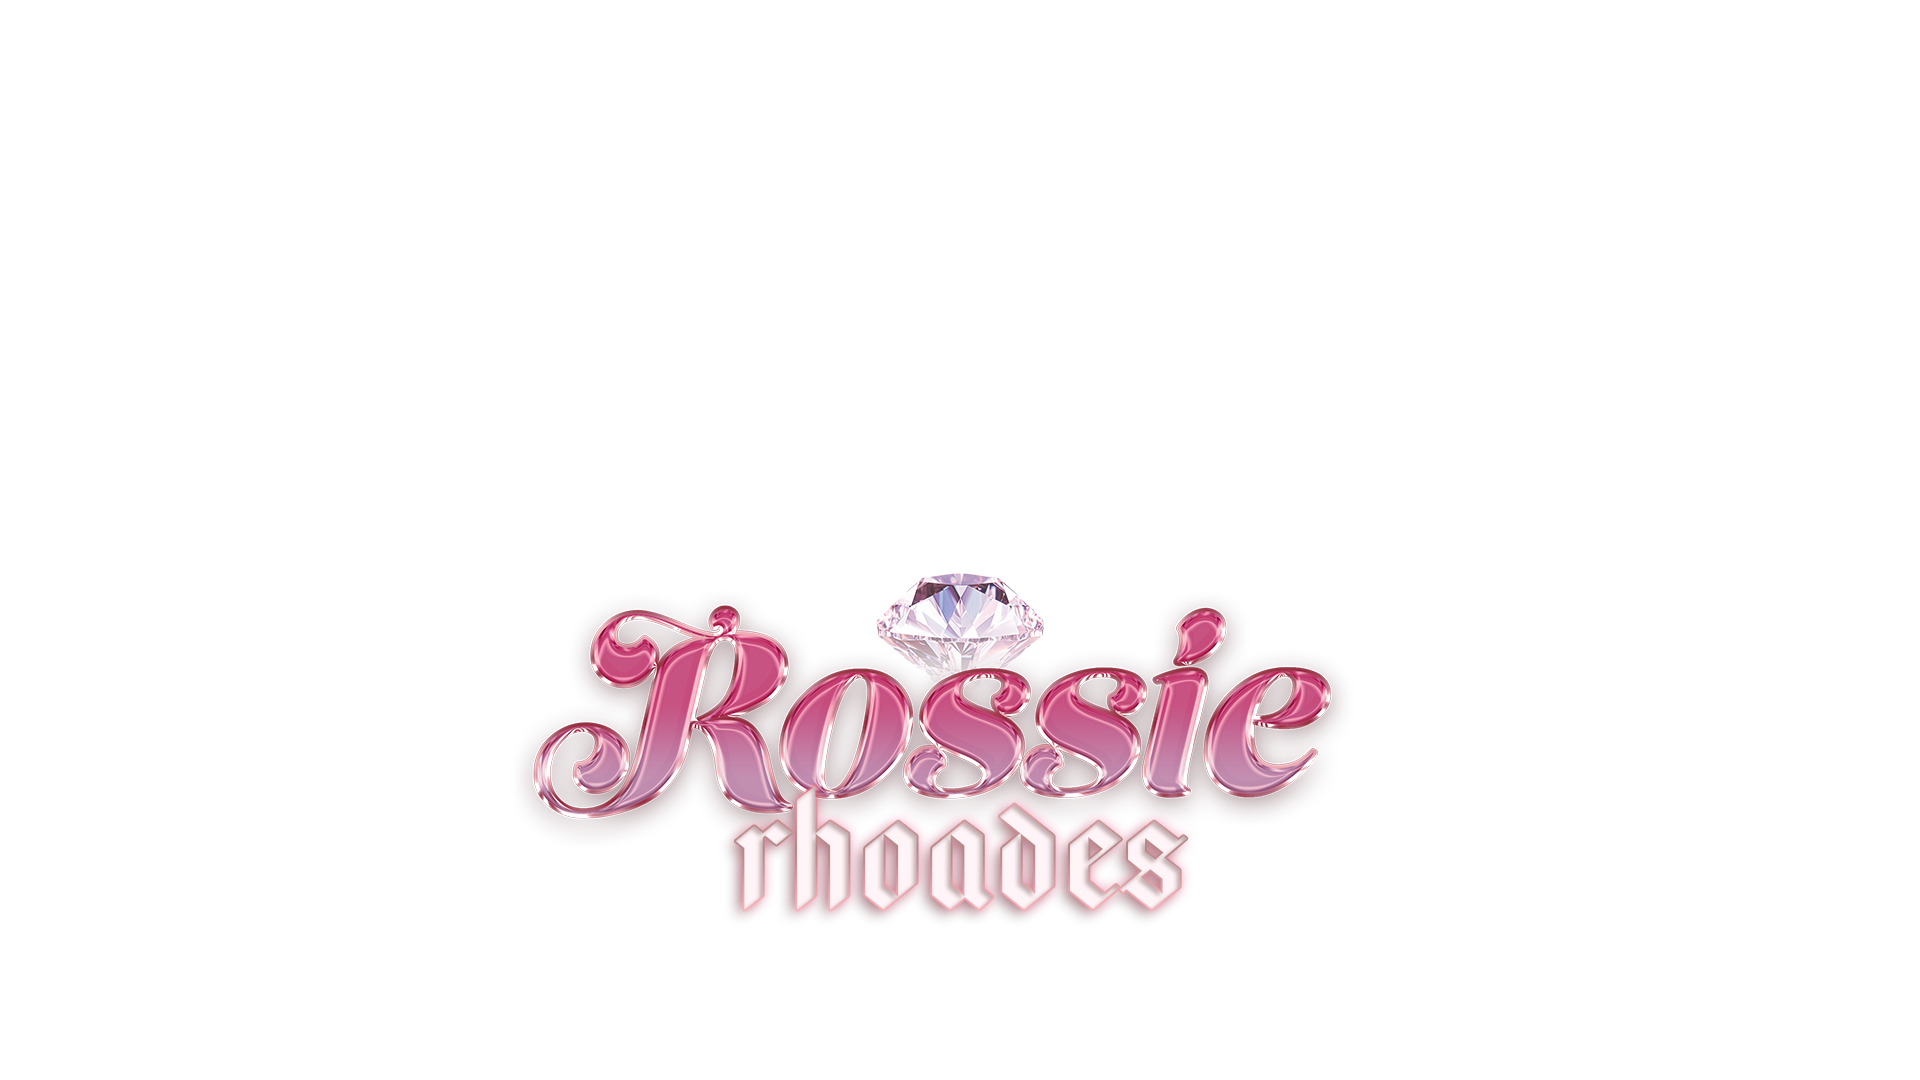 RossieRhoades . image: 1